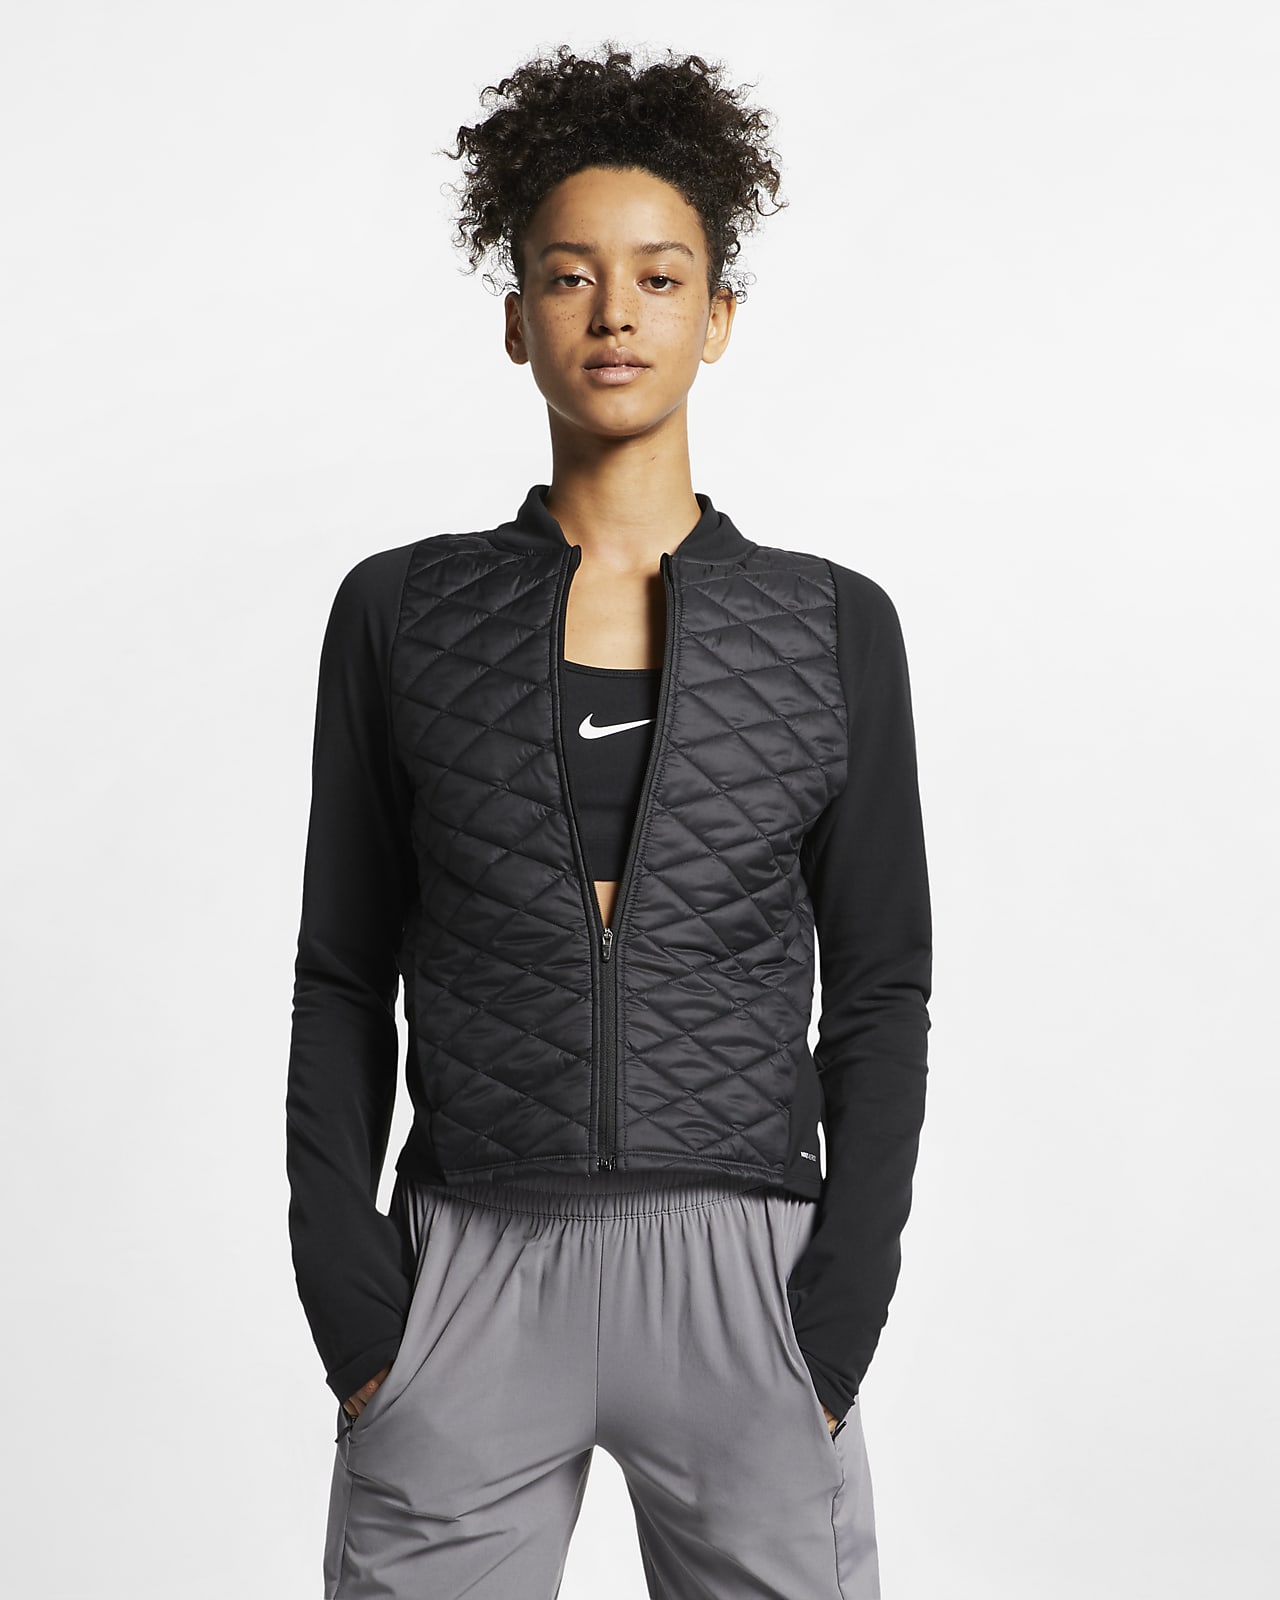 Women's Nike Athletic Jackets